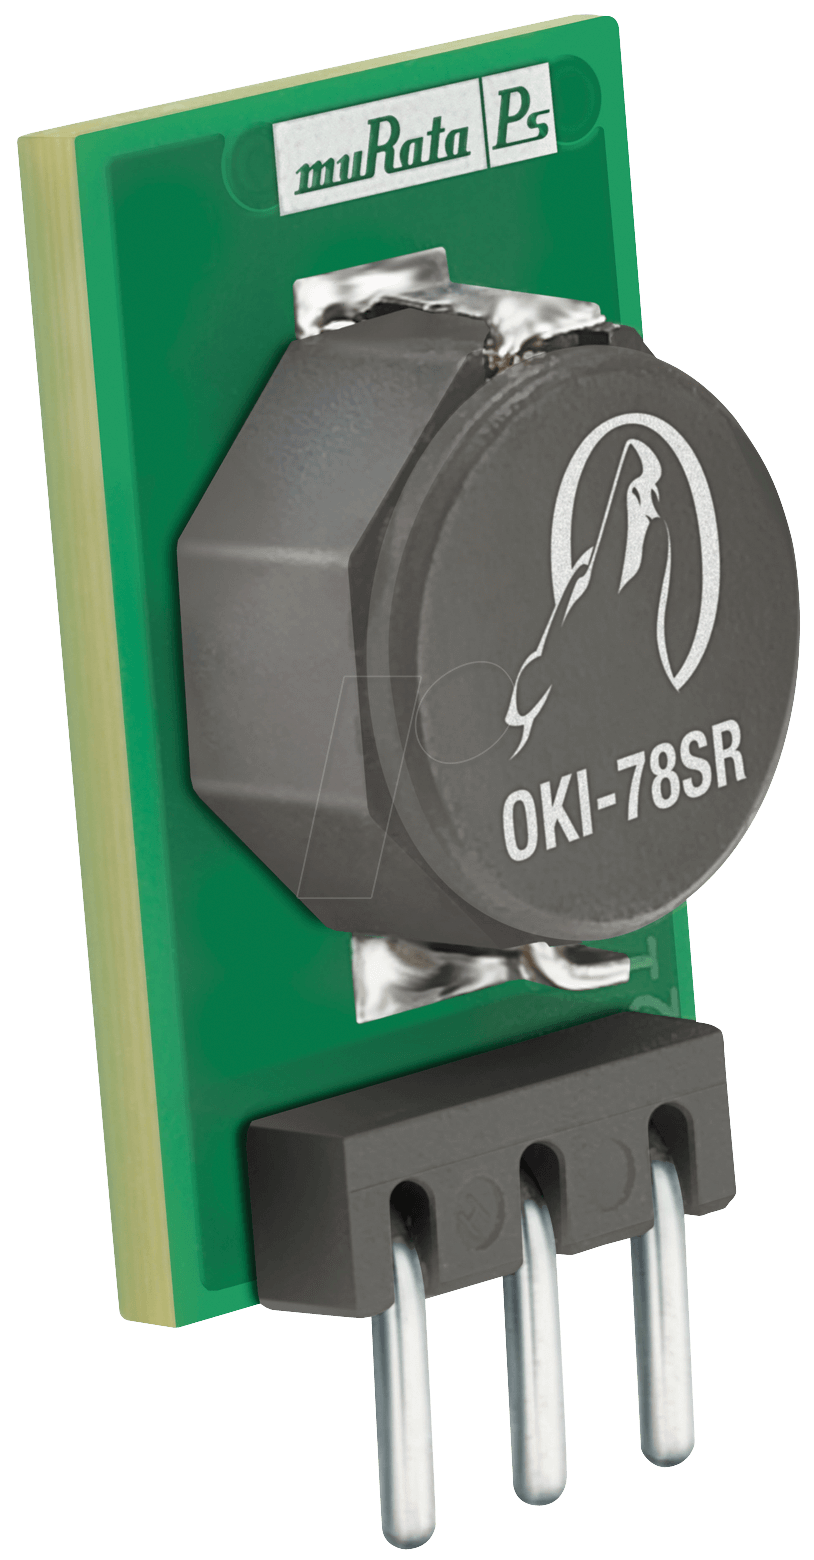 OKI3315W36C - DC/DC-Wandler OKI 78SR, 5 W, 3,3 V, 1500 mA, SIL, Single von MURATA POWER SOLUTIONS